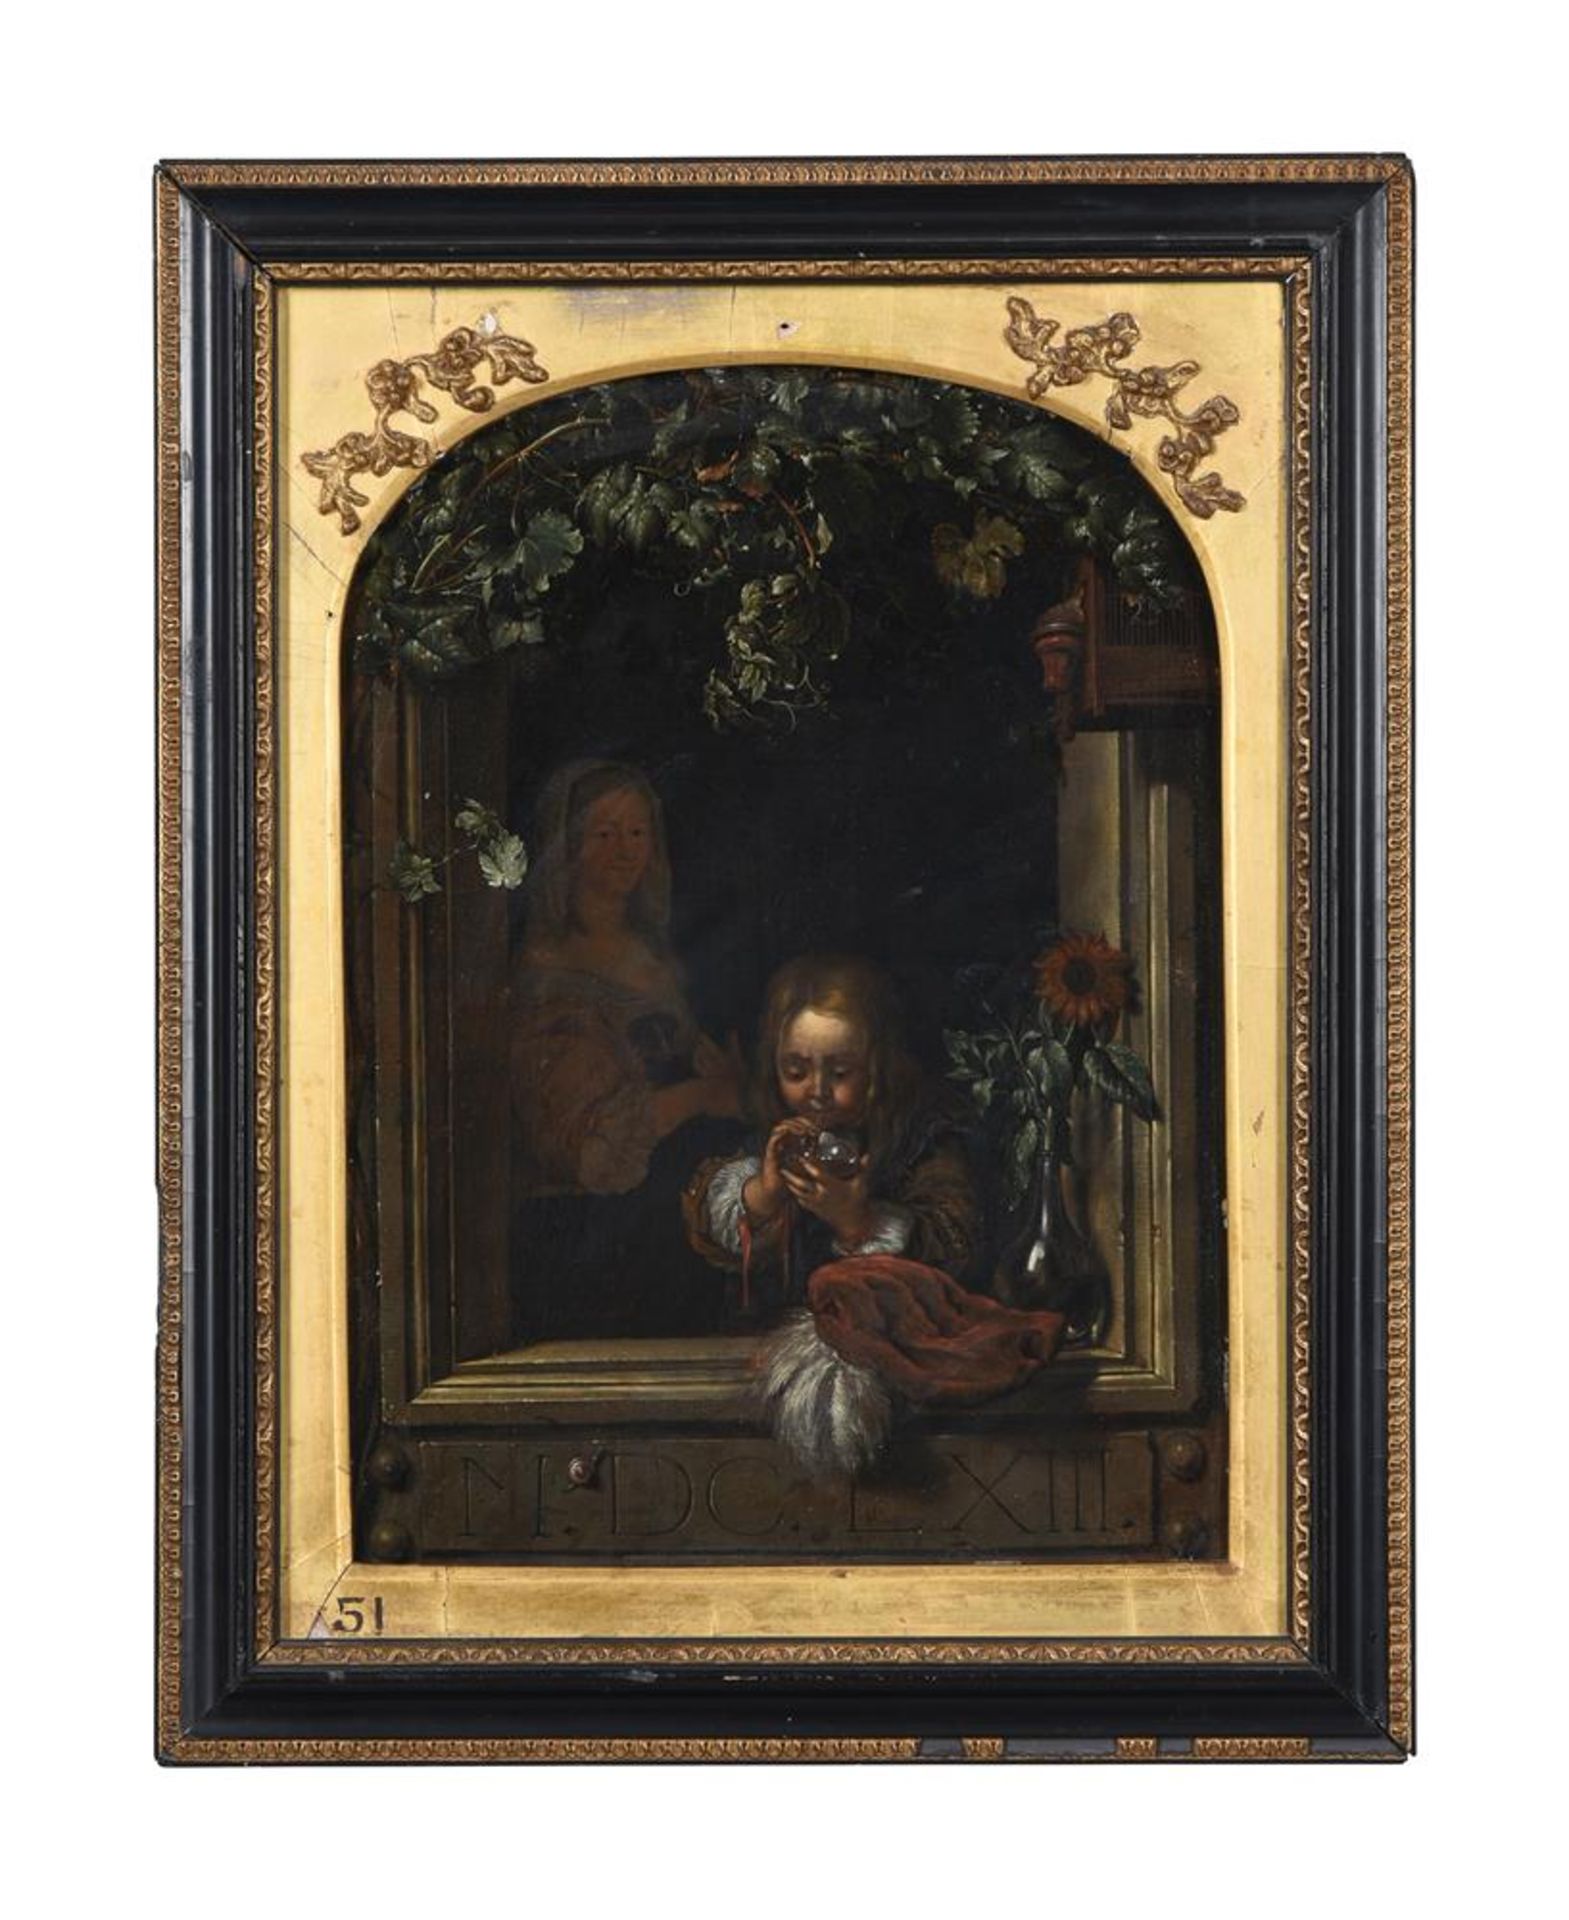 AFTER FRANS VAN MIERIS THE ELDER, BOY BLOWING BUBBLES IN A WINDOW - Image 2 of 3